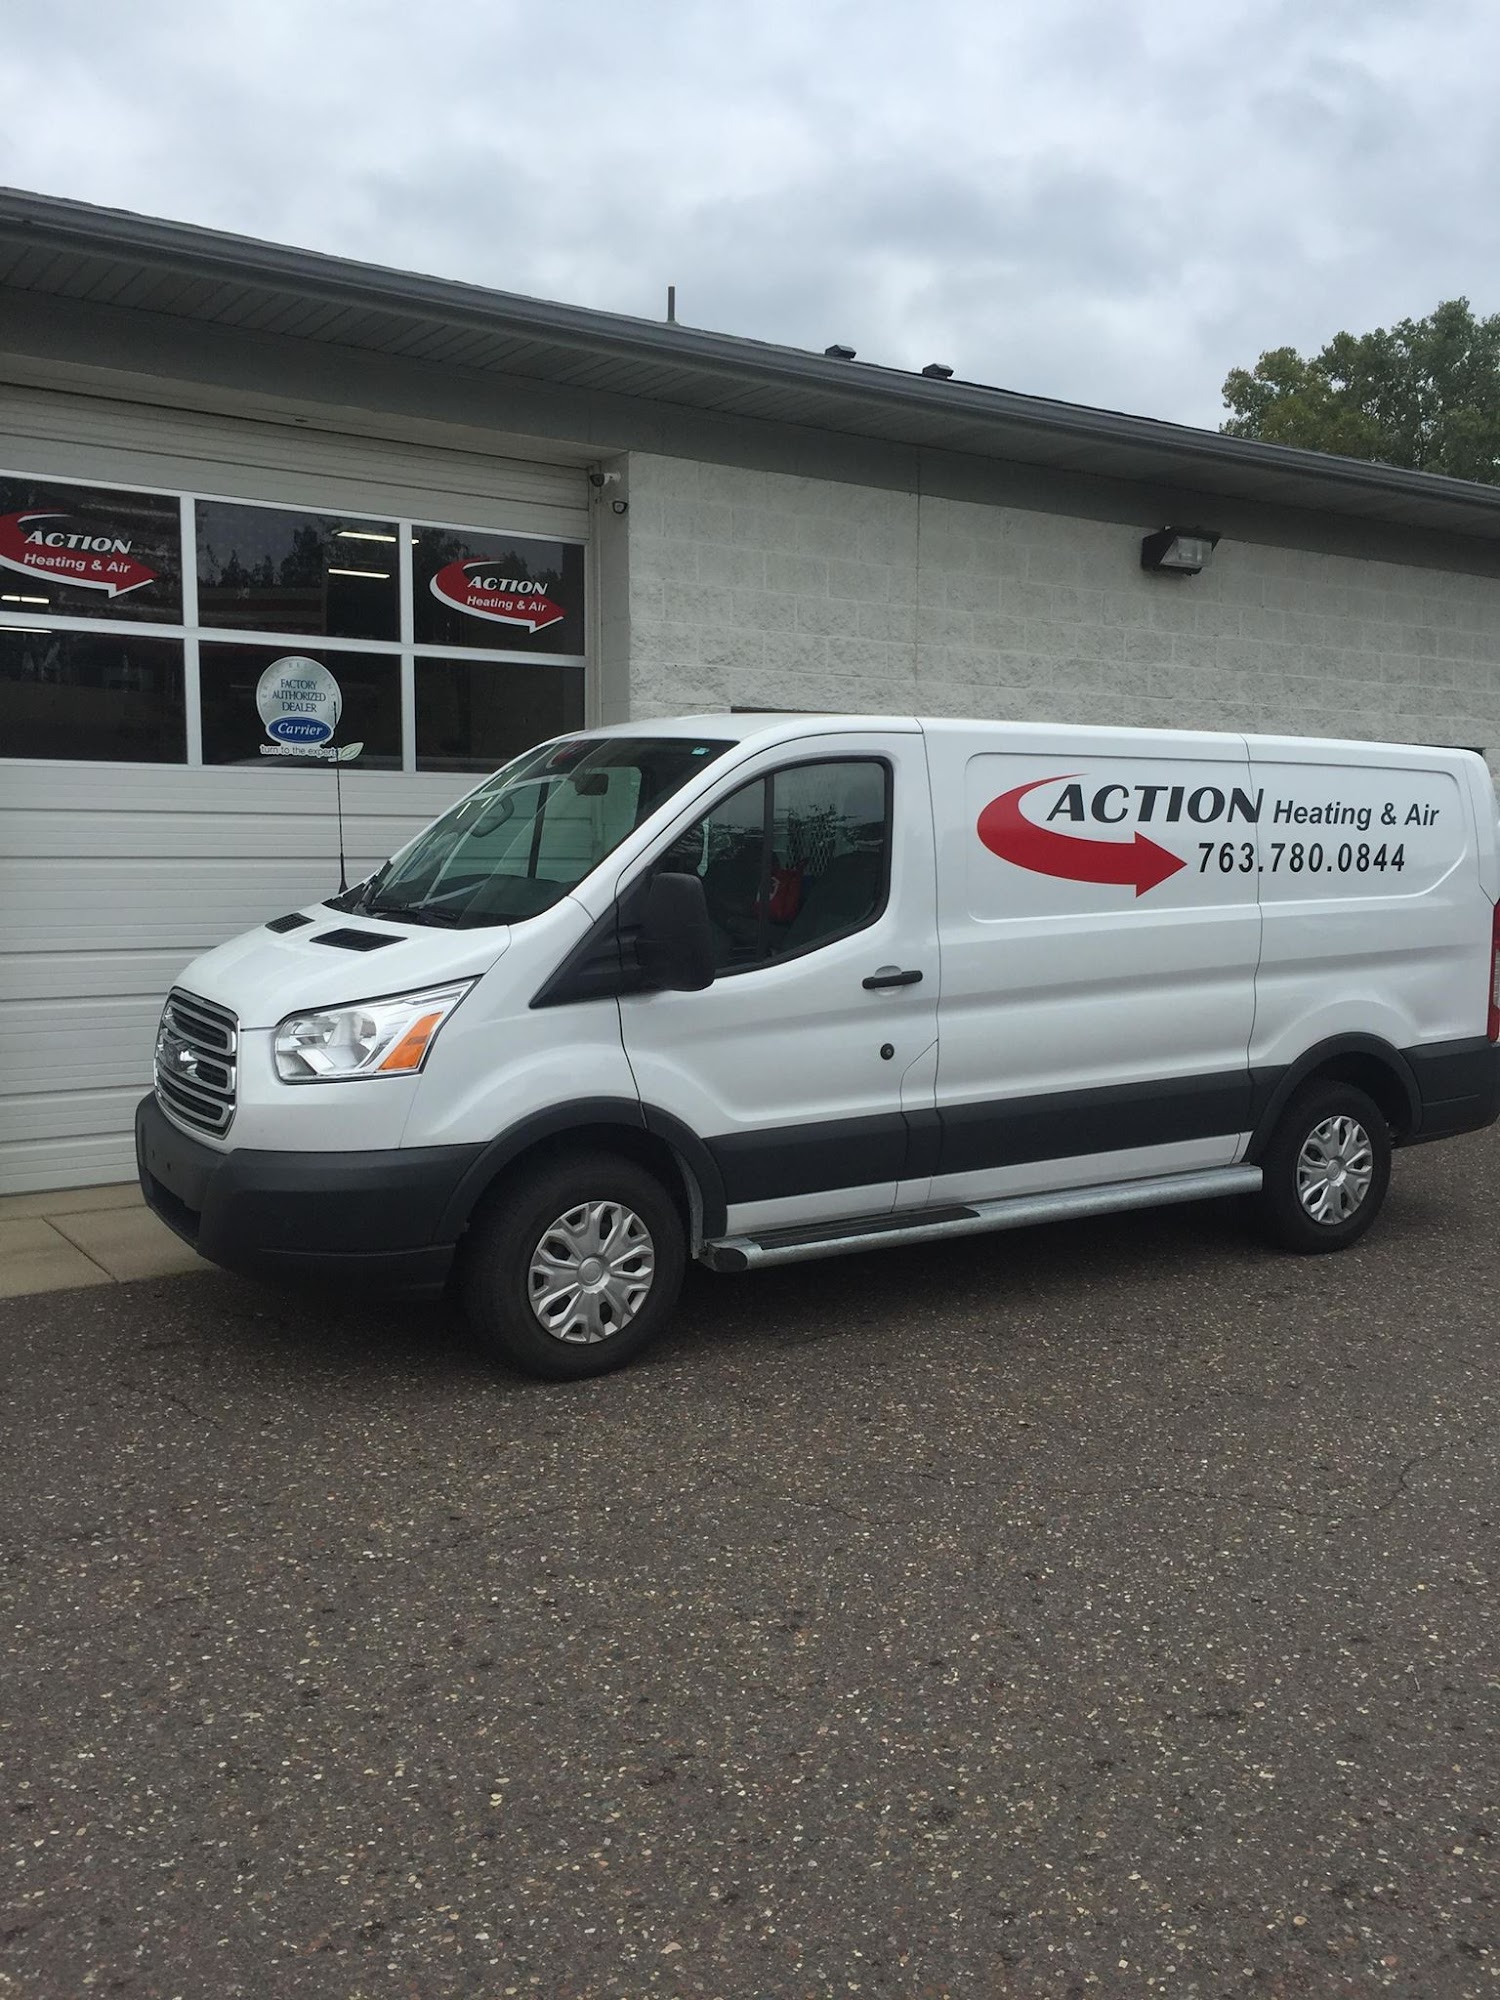 Action Heating & Air Conditioning, Inc. 8140 Arthur St NE #C, Spring Lake Park Minnesota 55432